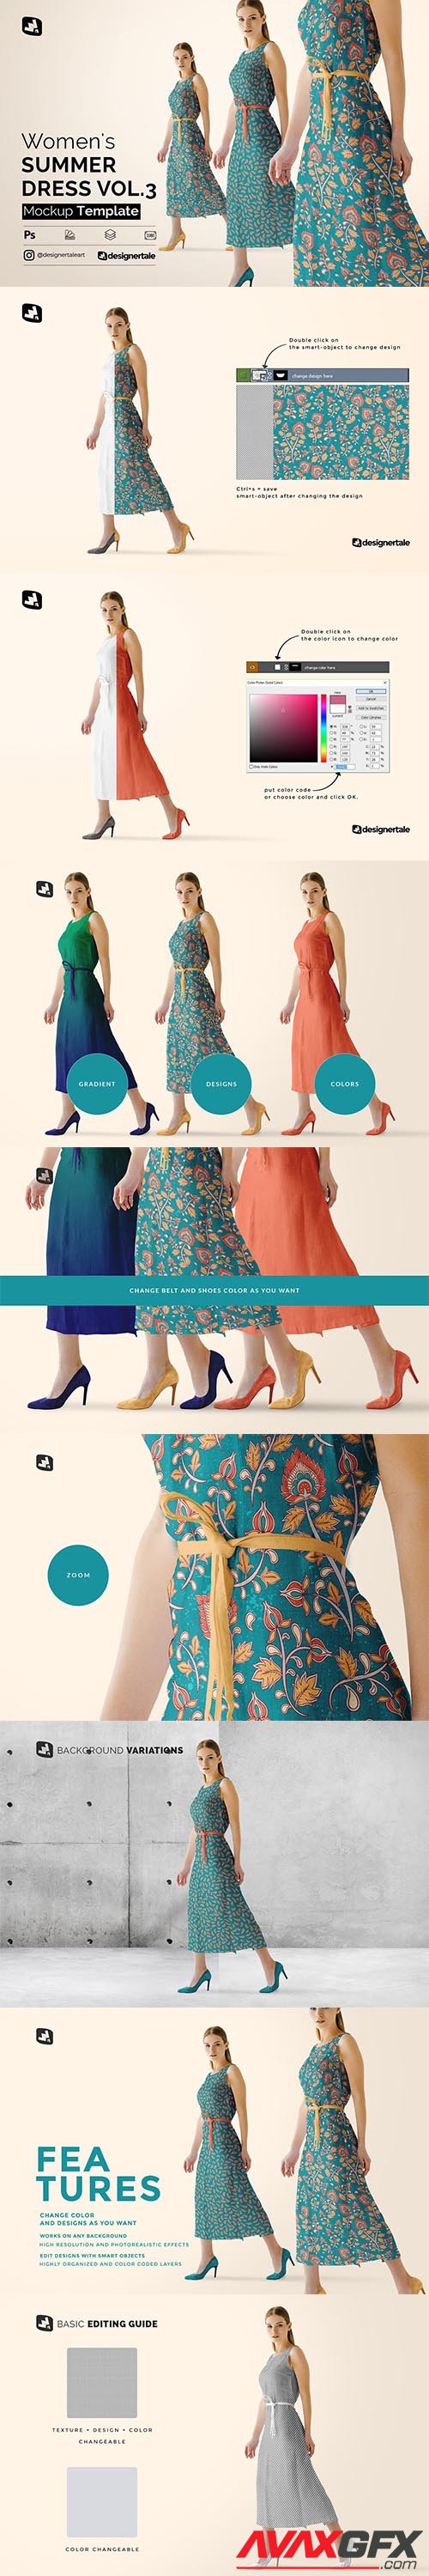 CreativeMarket - Women's Summer Dress Mockup Vol.3 4905778